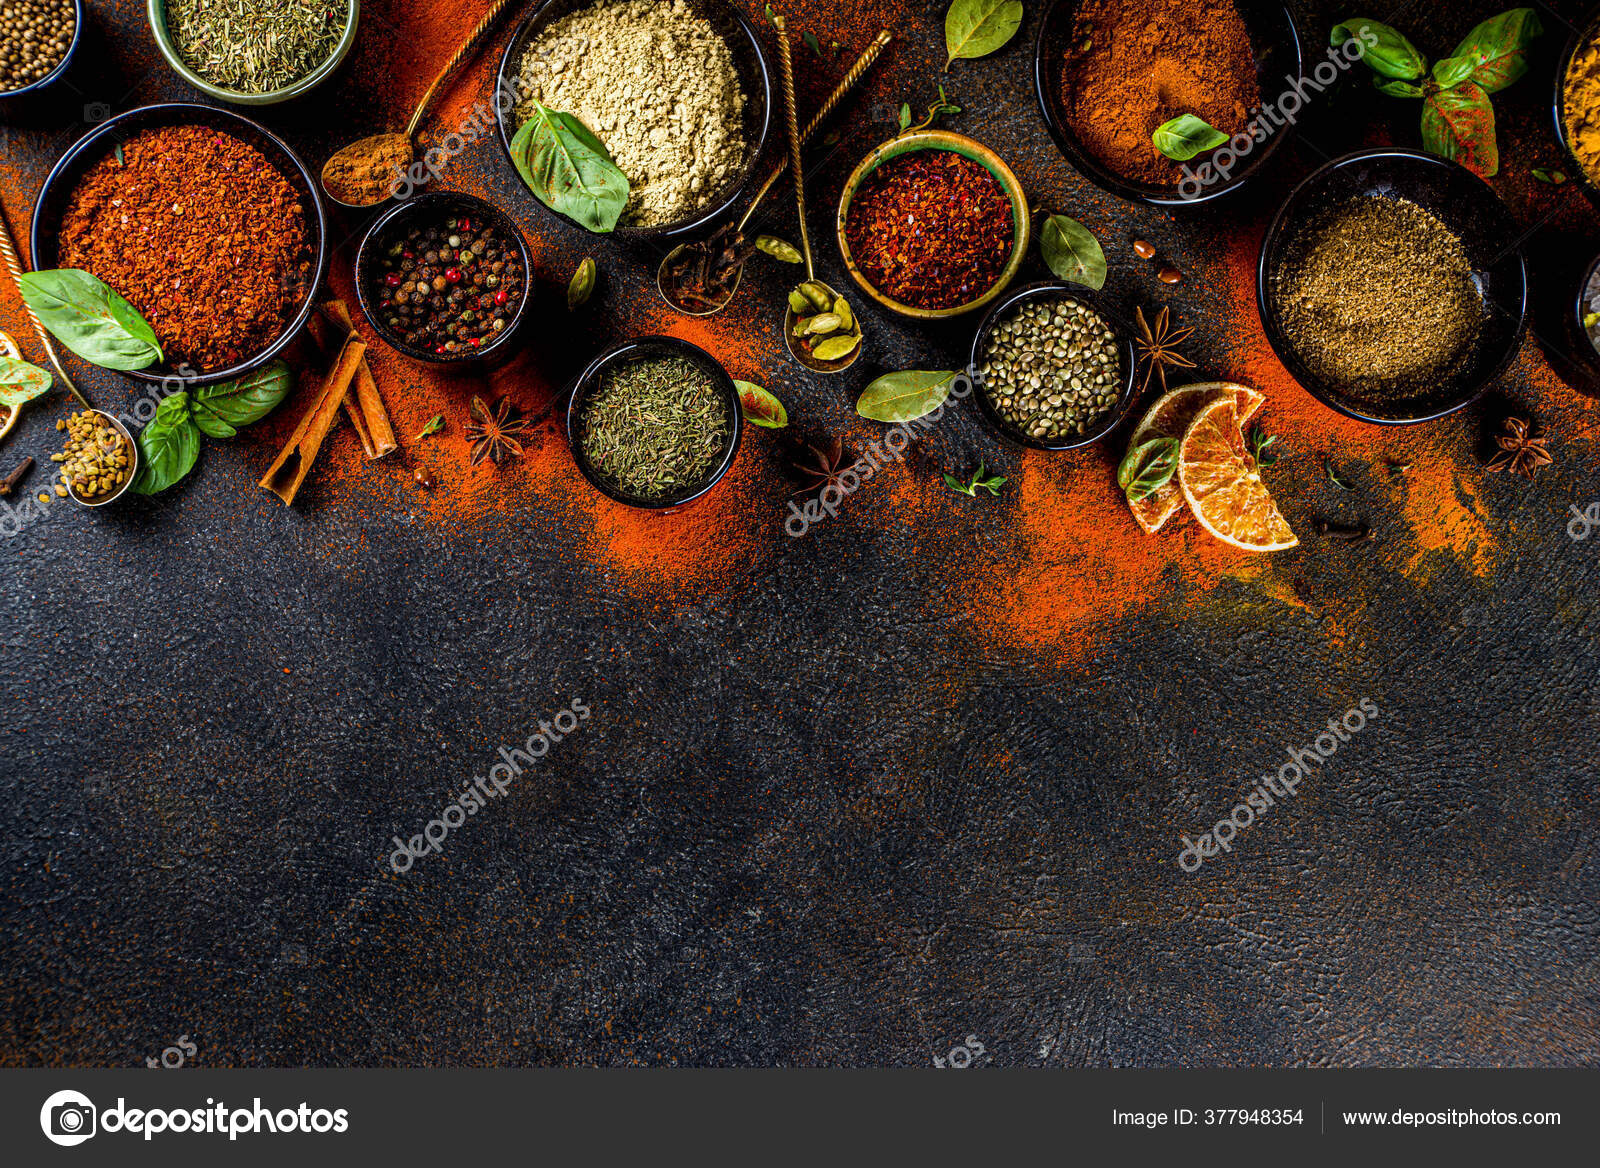 https://st4.depositphotos.com/9012638/37794/i/1600/depositphotos_377948354-stock-photo-set-spices-herbs-cooking-small.jpg